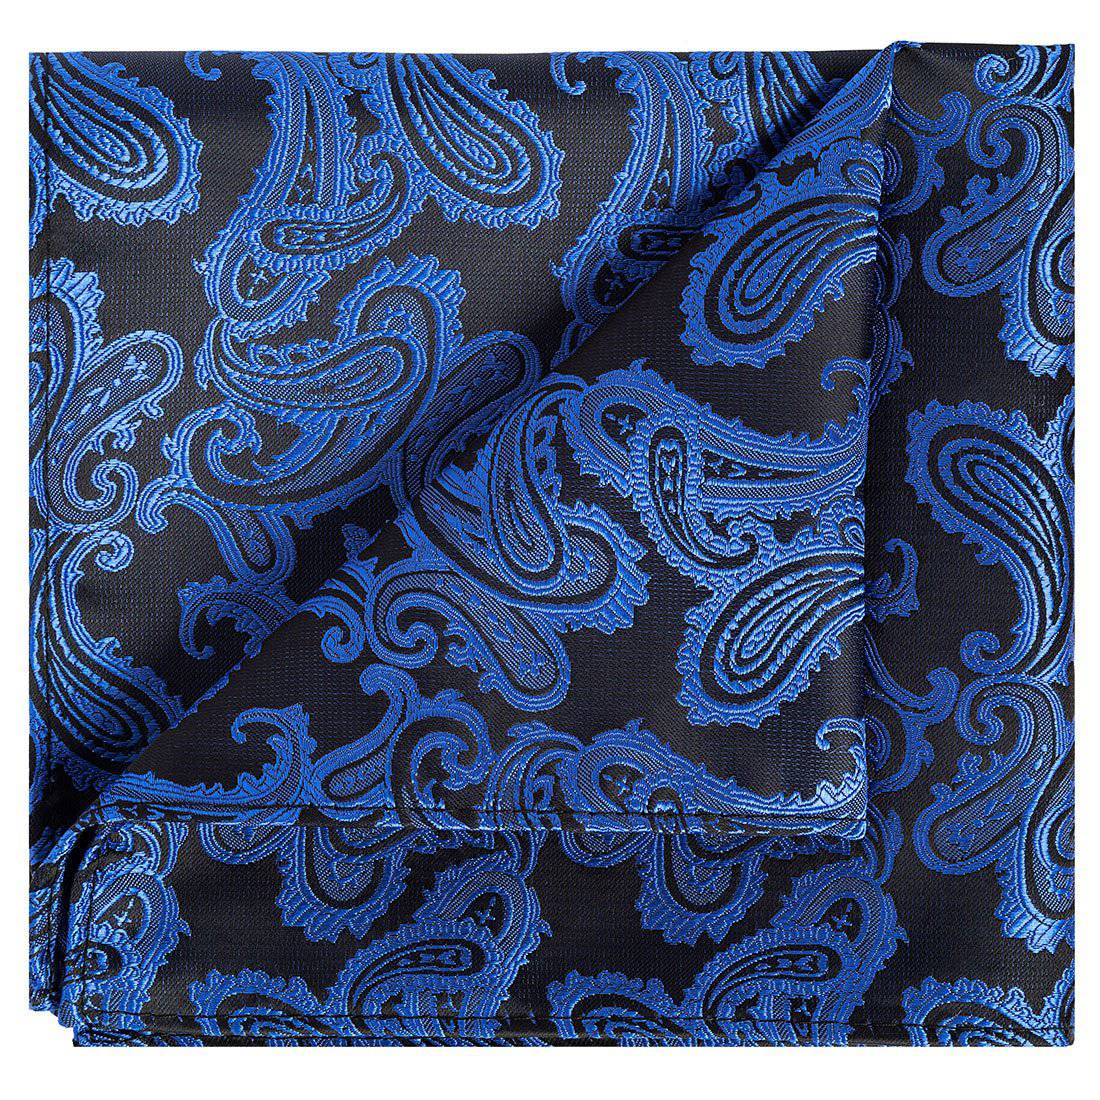 Cobalt Blue on Black Paisley Pocket Square - Tie, bowtie, pocket square  | Kissties